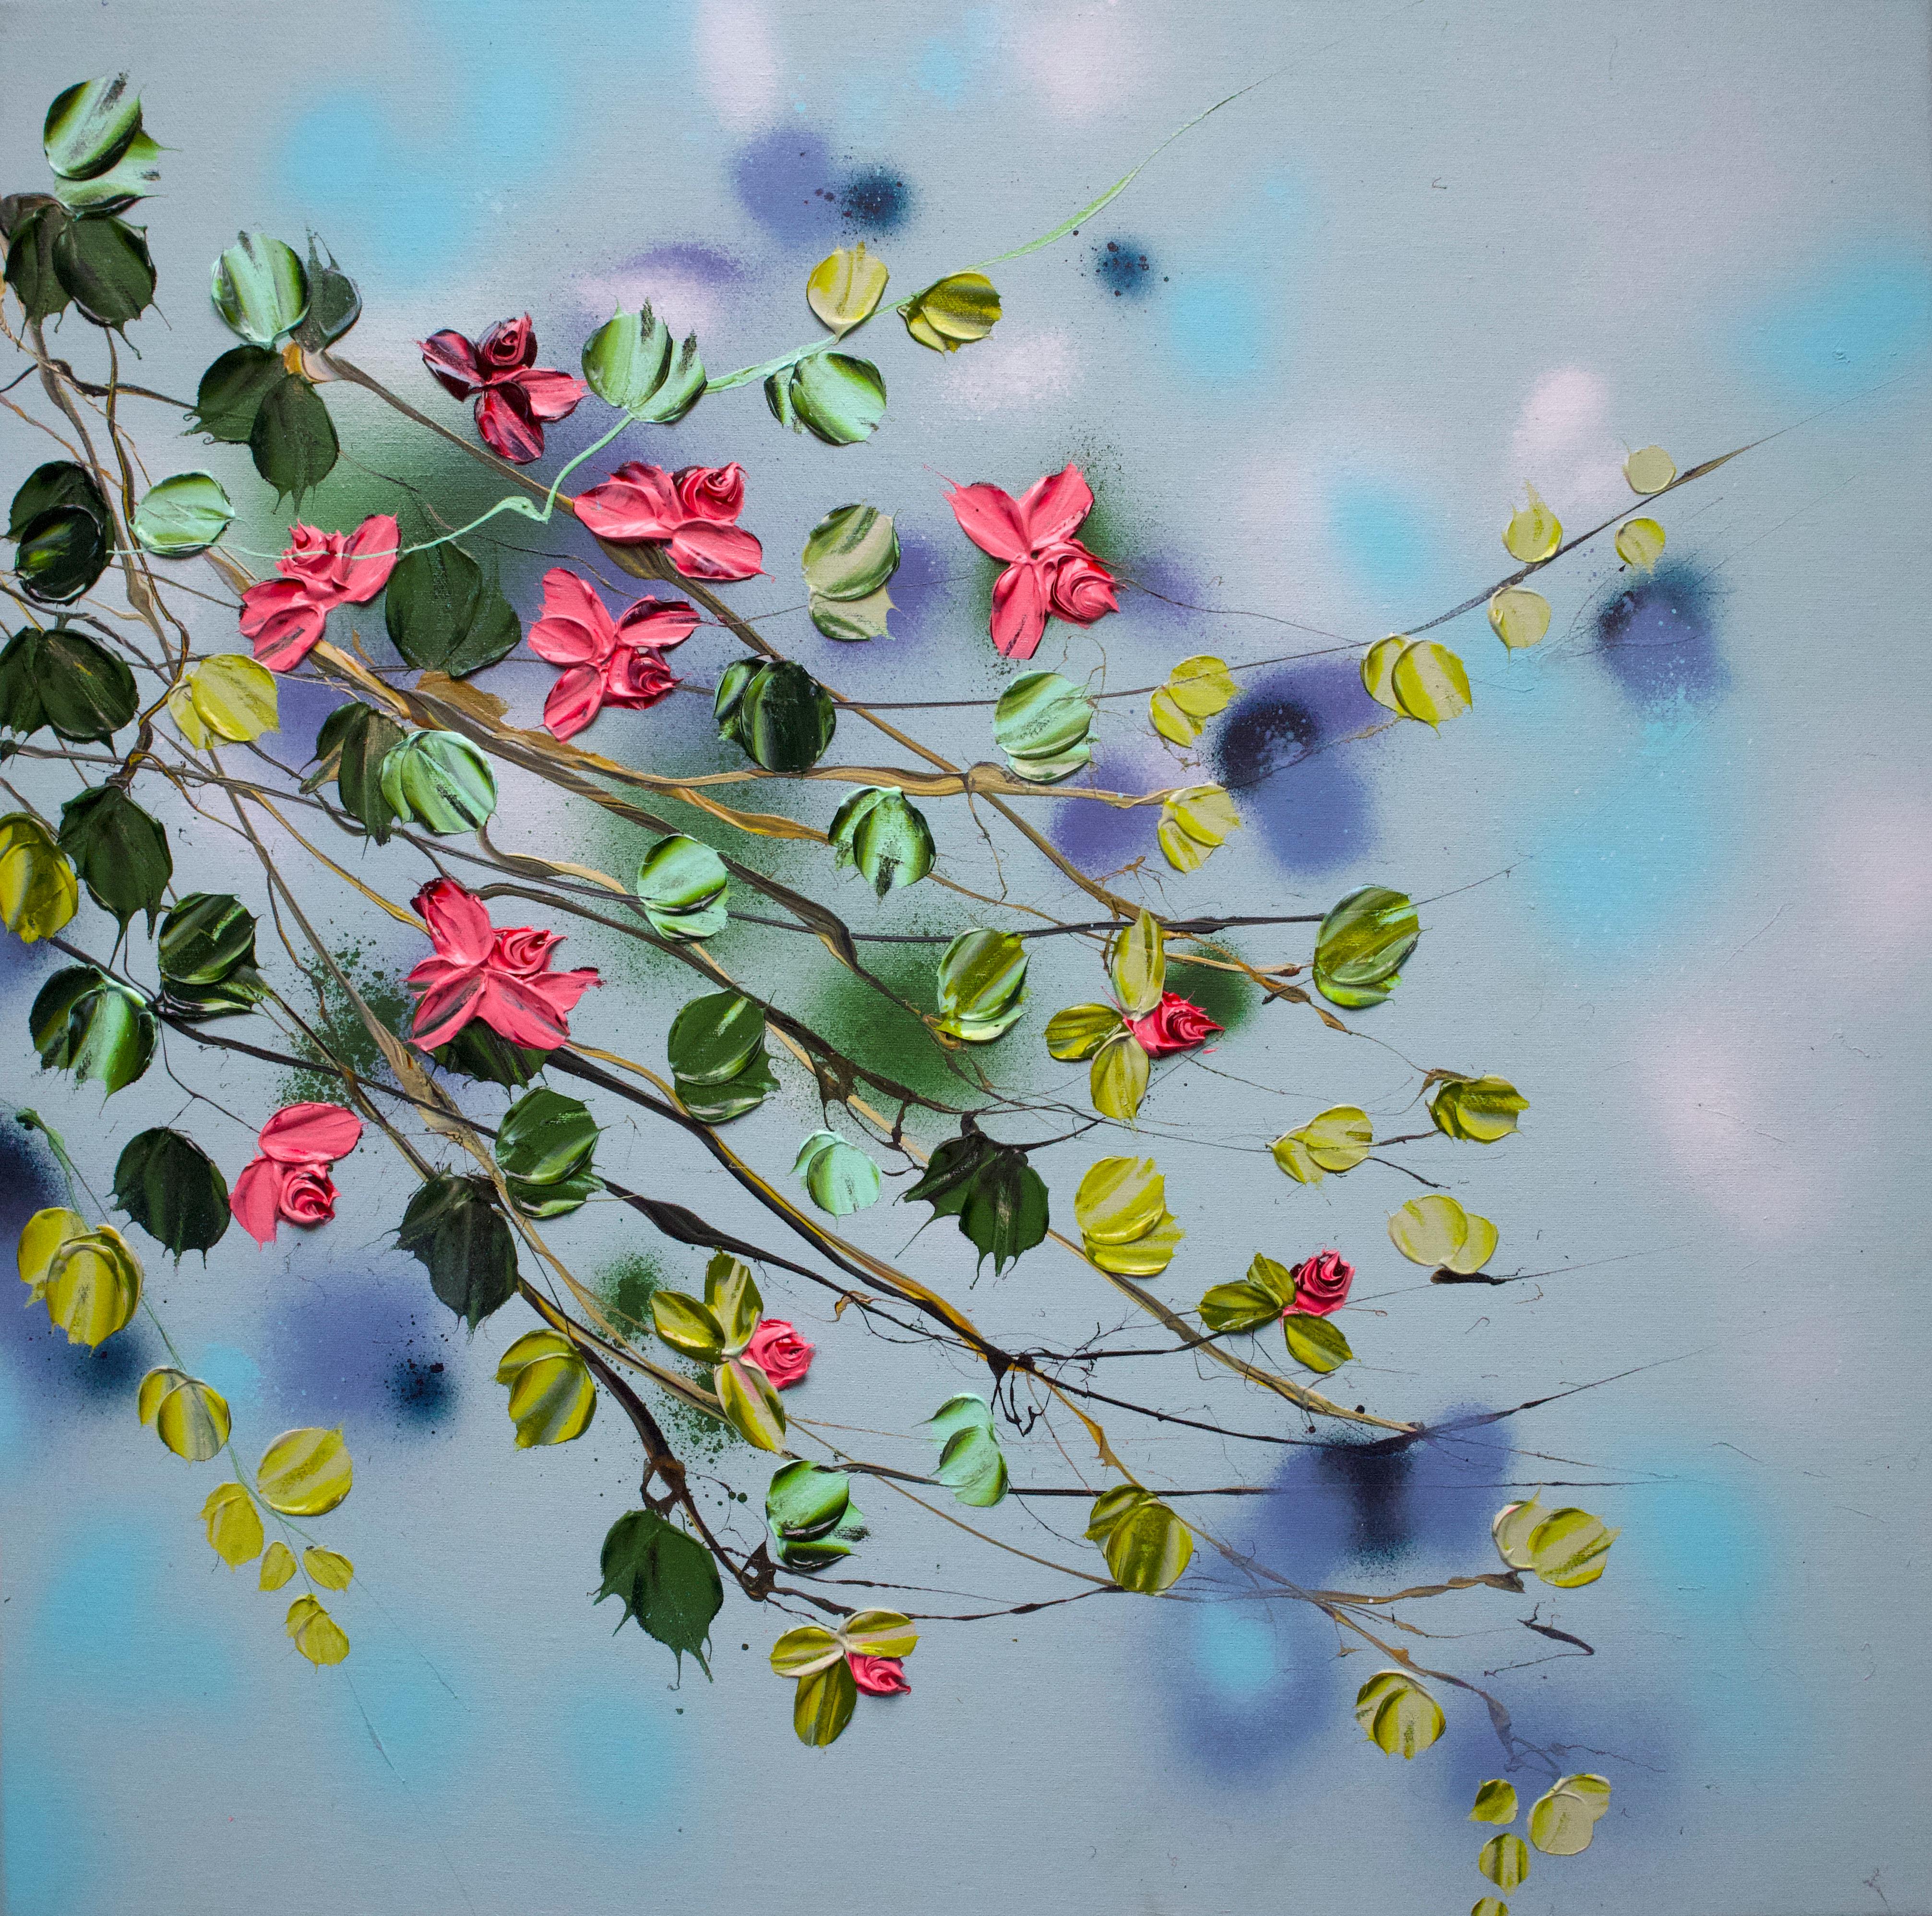 Anastassia Skopp Abstract Painting - "Satori Blooms" floral impasto modern painting on canvas